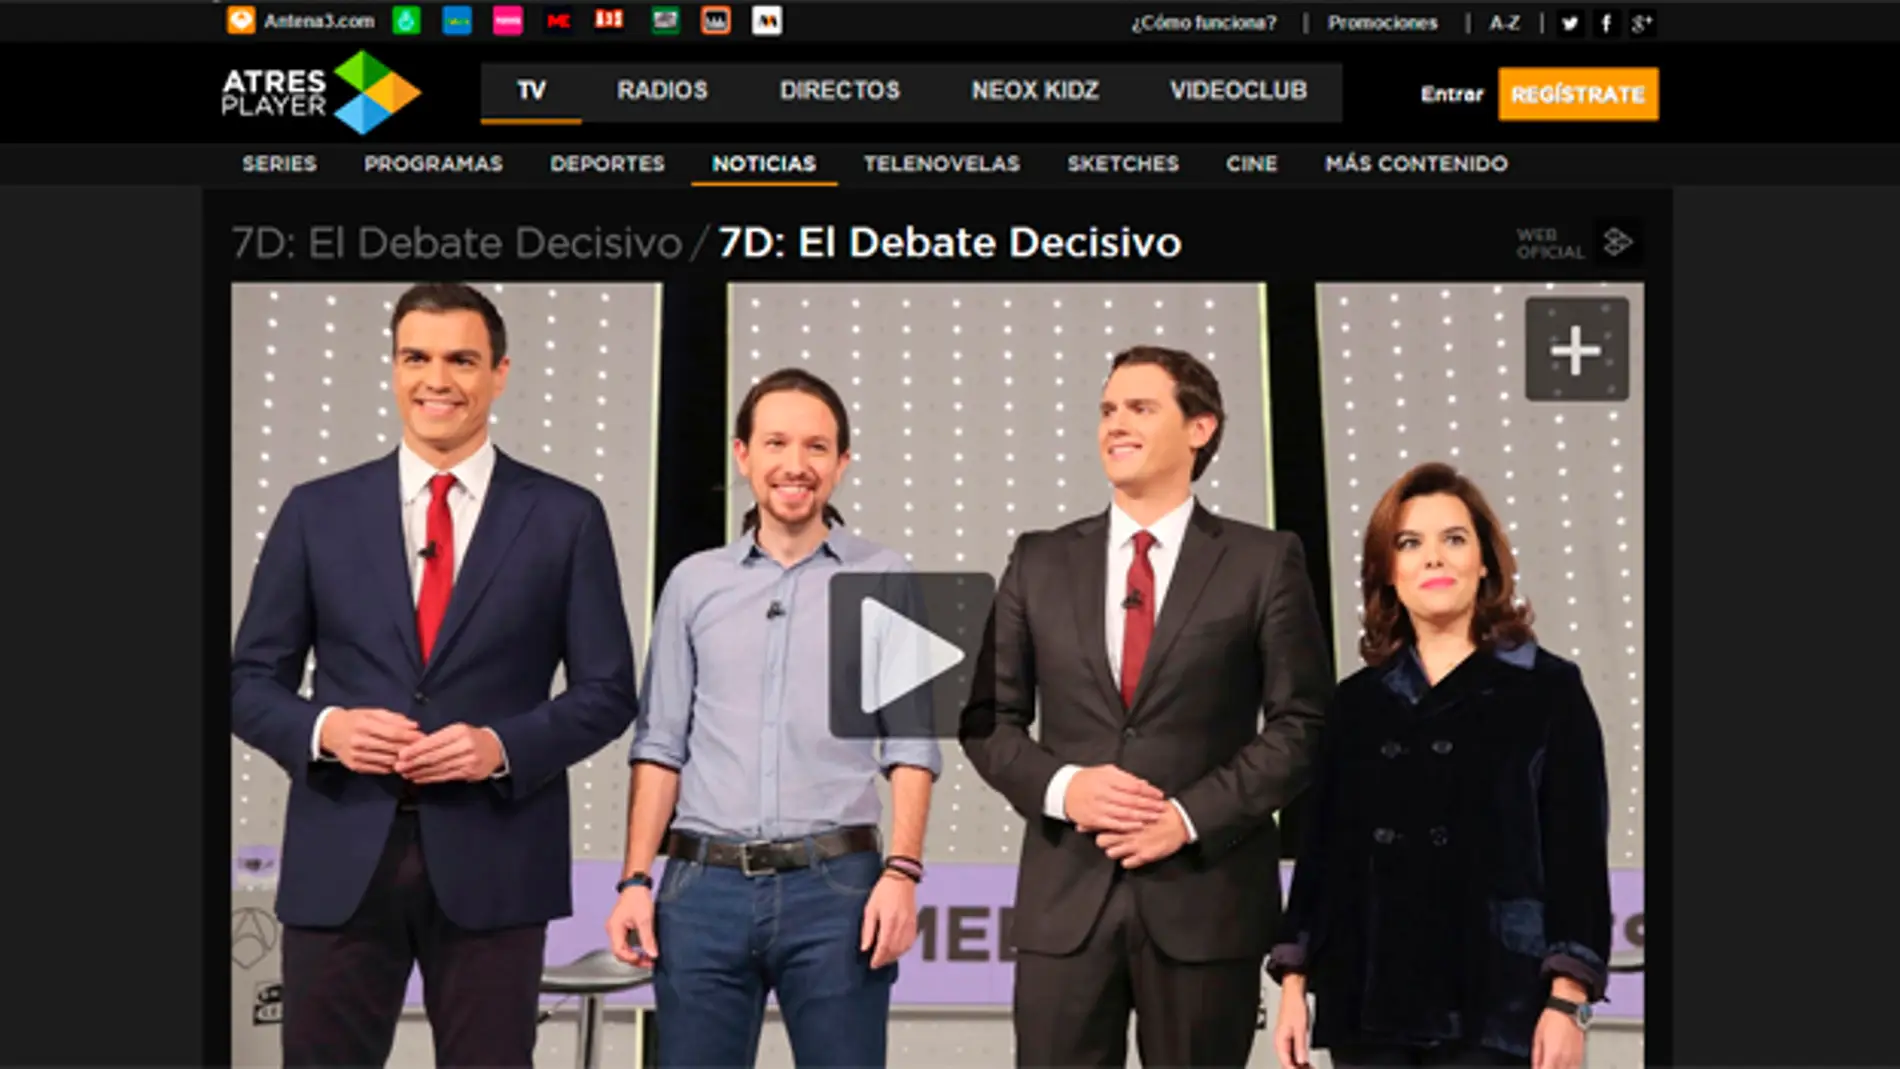 7D, El Debate Decisivo en Atresplayer